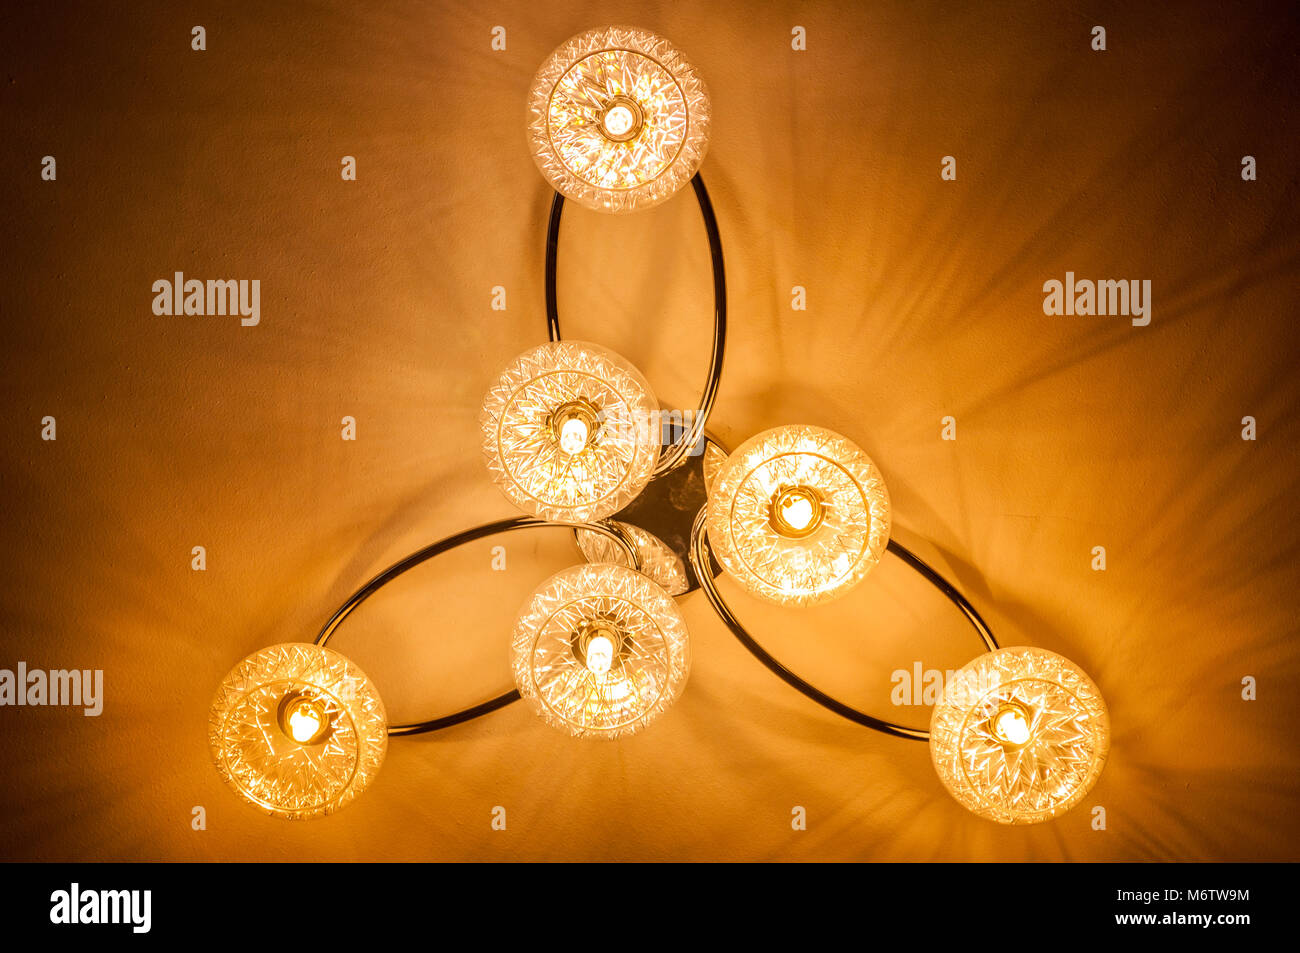 Luces Colgantes De Techo Fotos e Imágenes de stock - Alamy